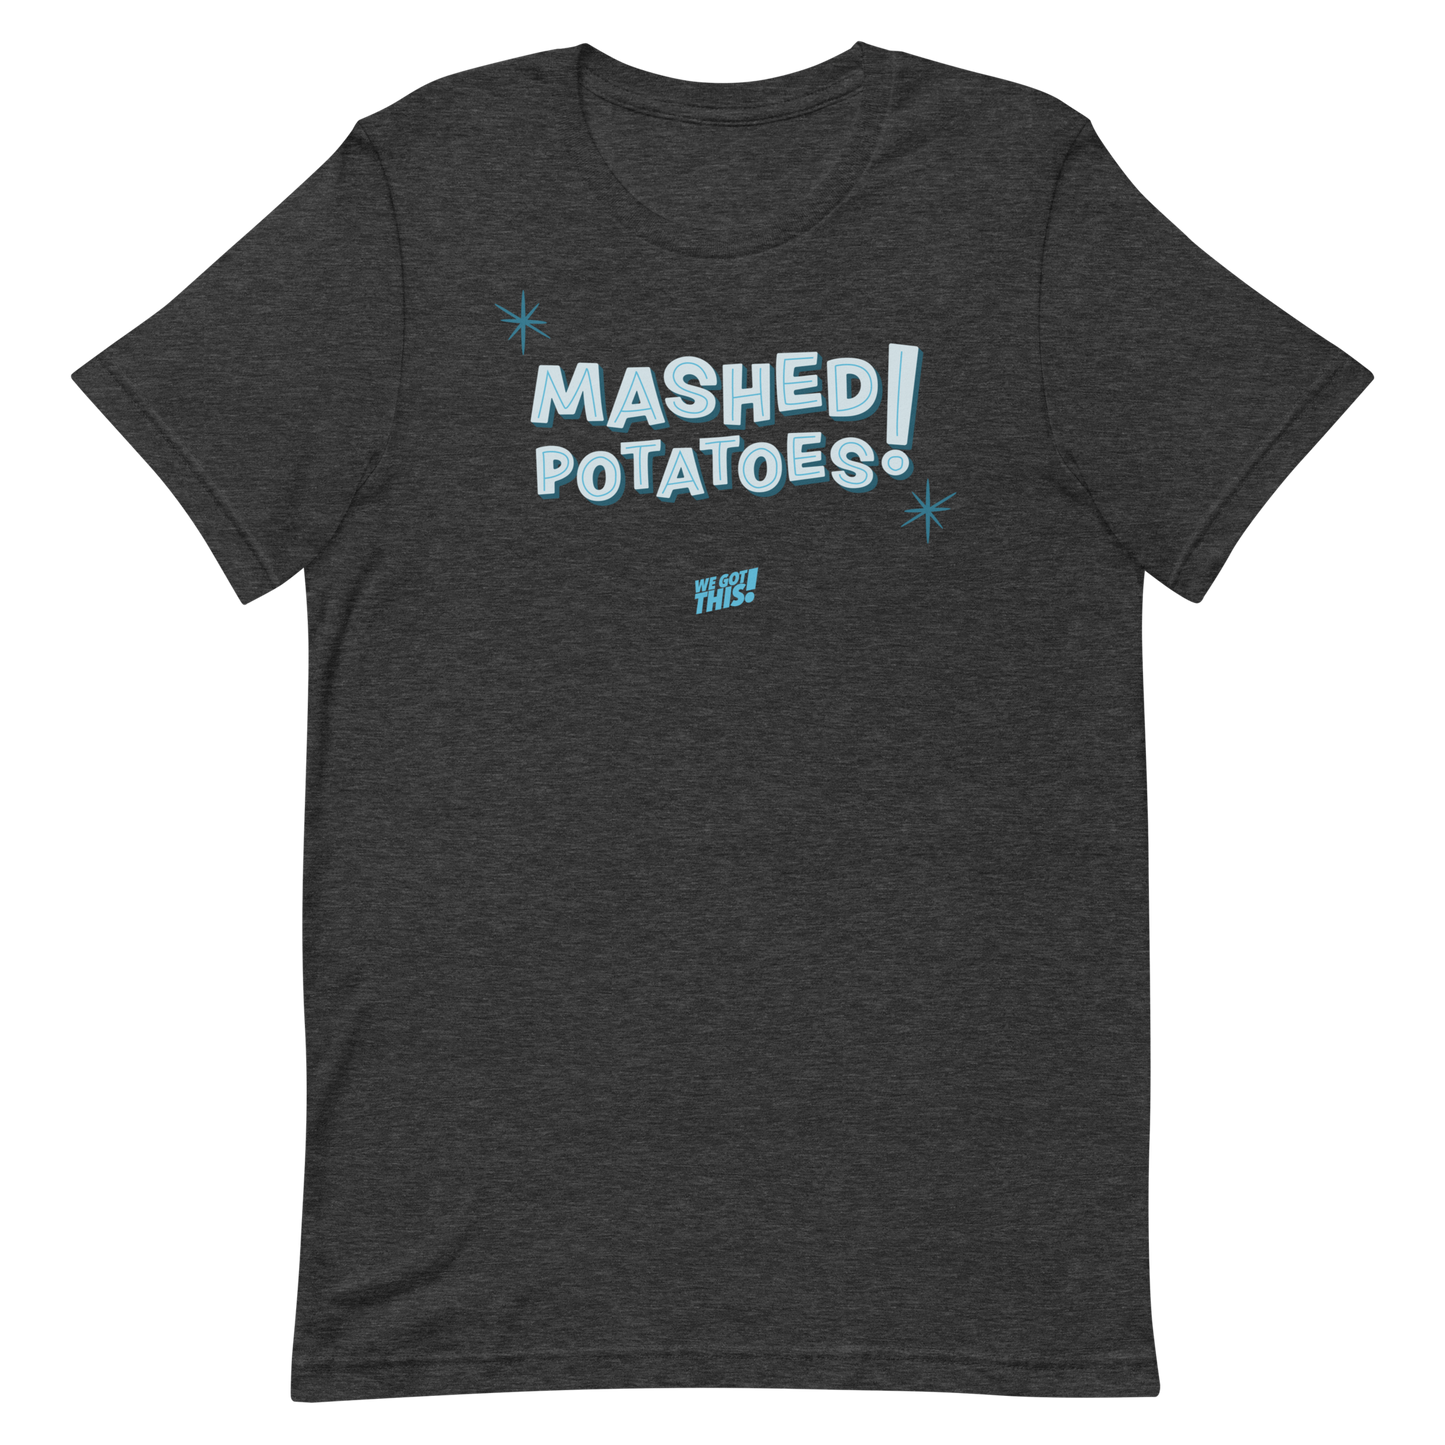 MASHED POTATOES! T-shirt